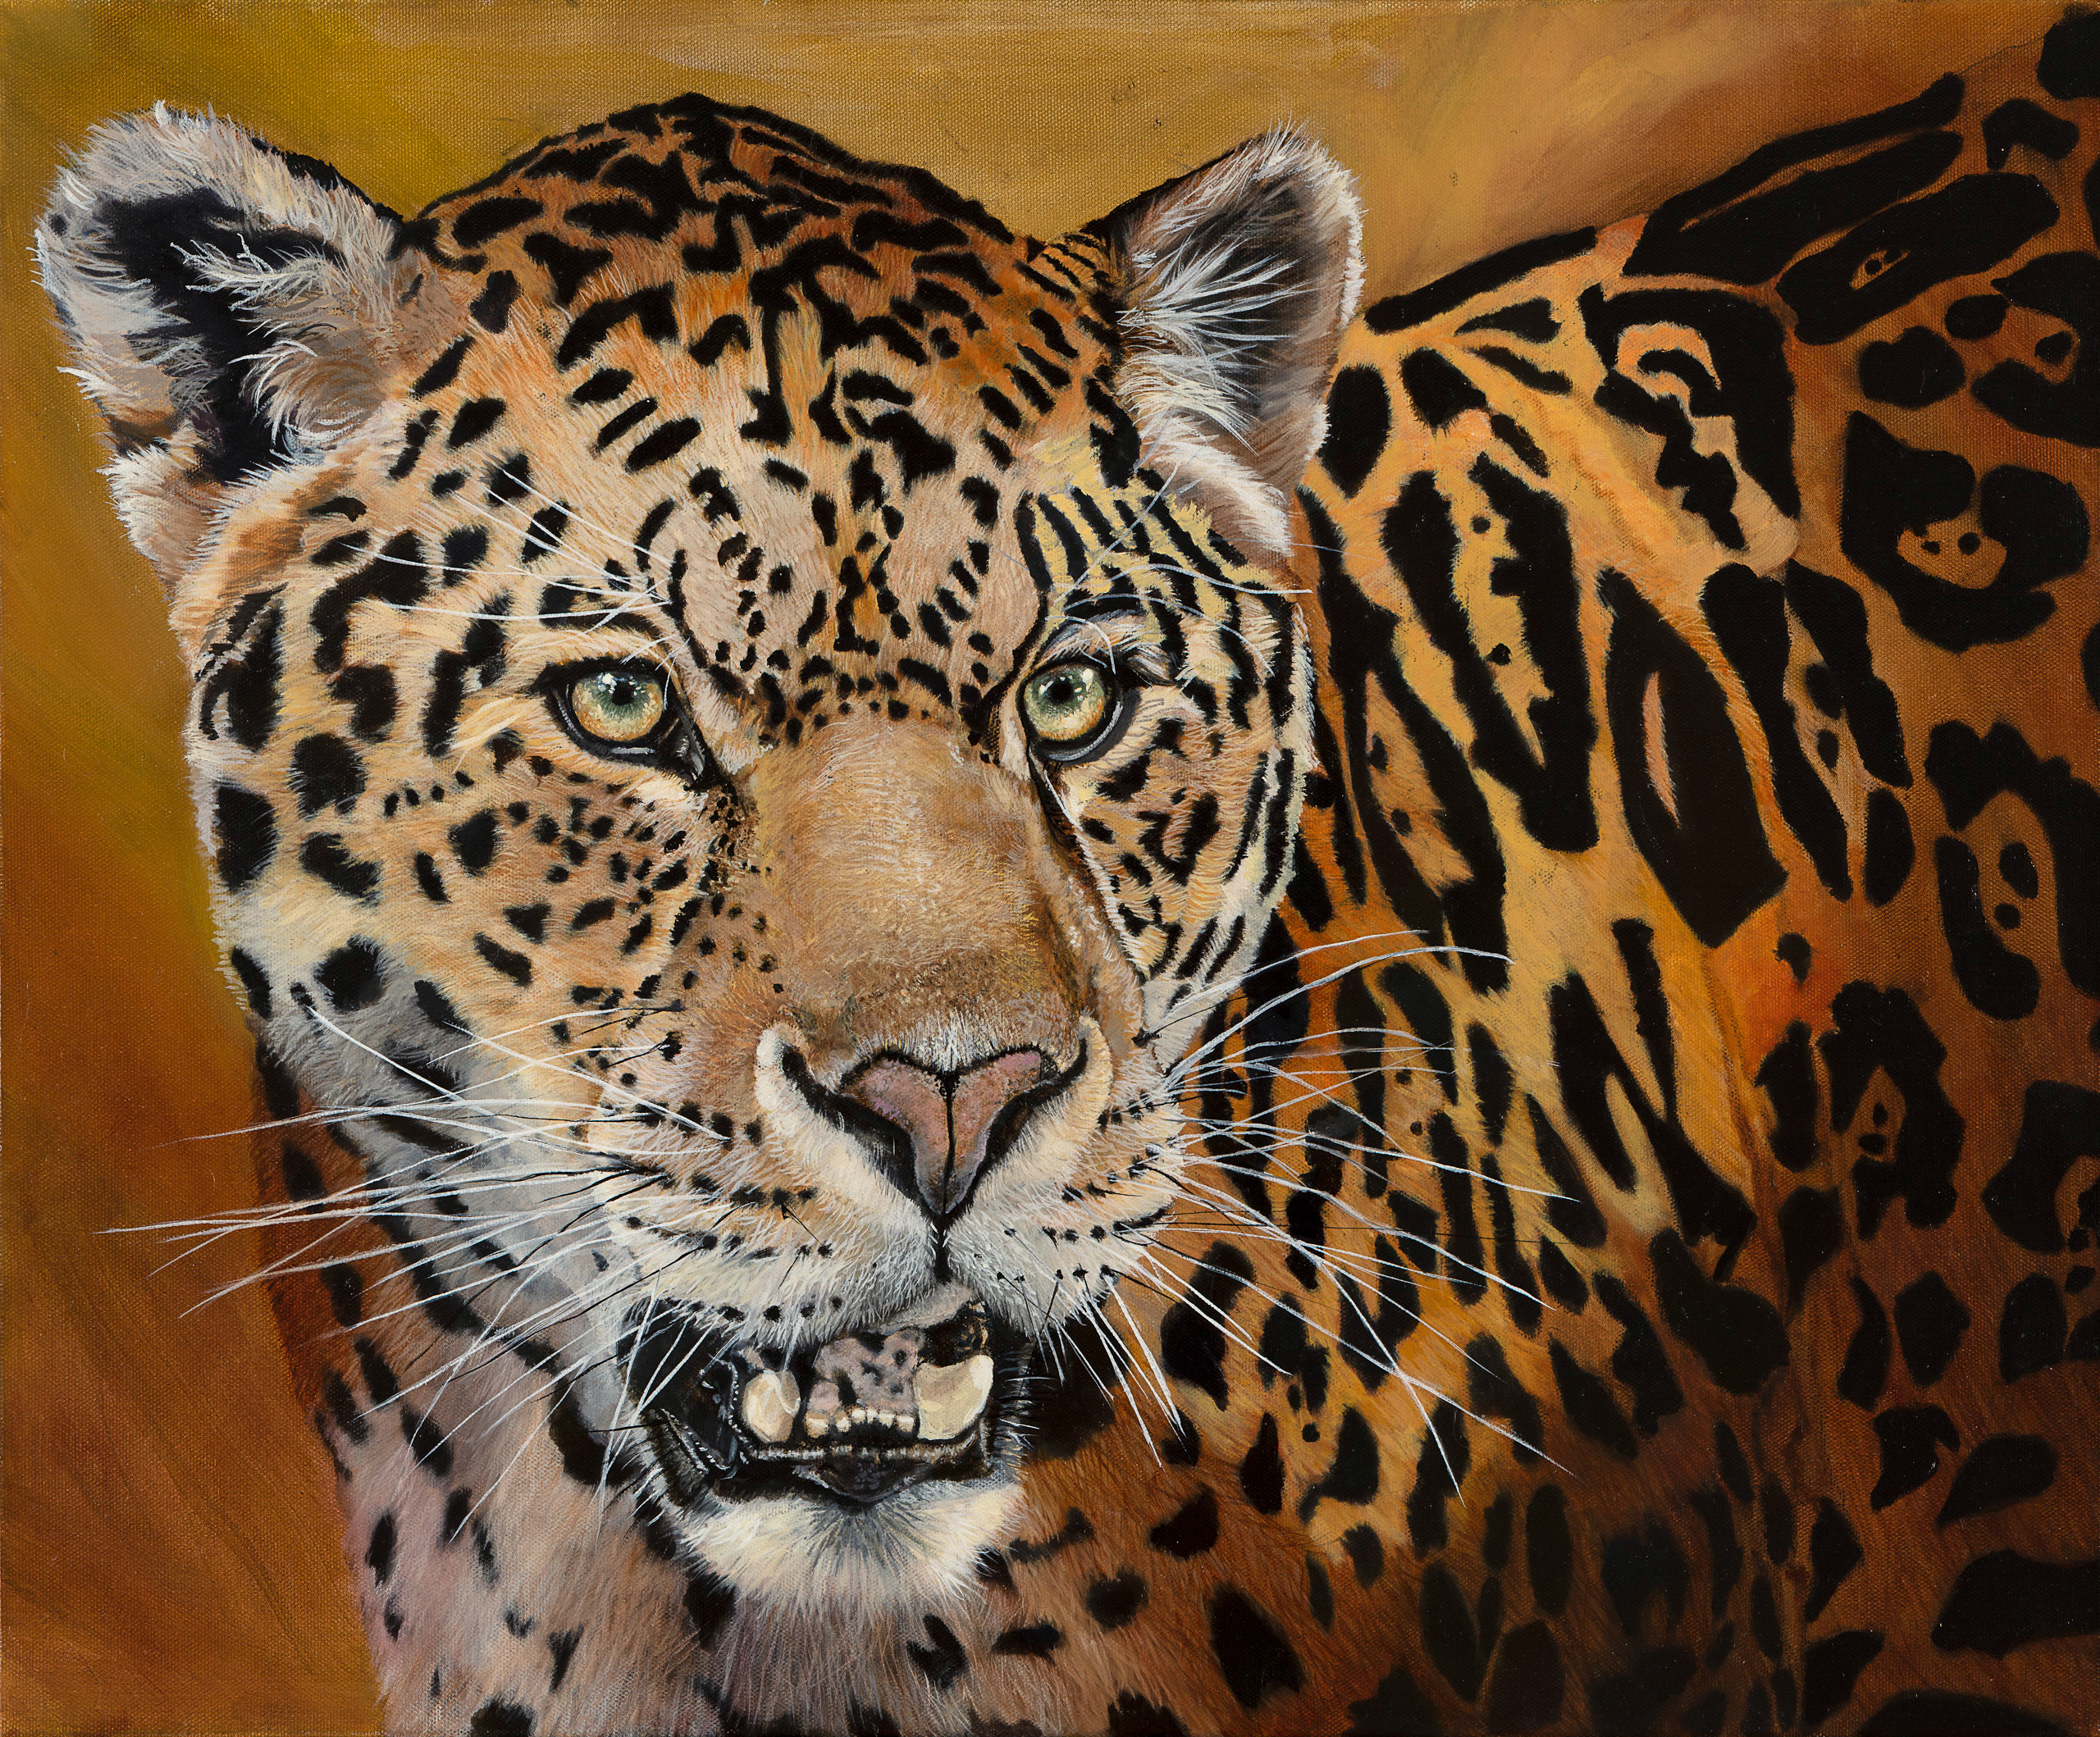 Alexandra saunders   jaguar .ginger mpdfrv wswnap